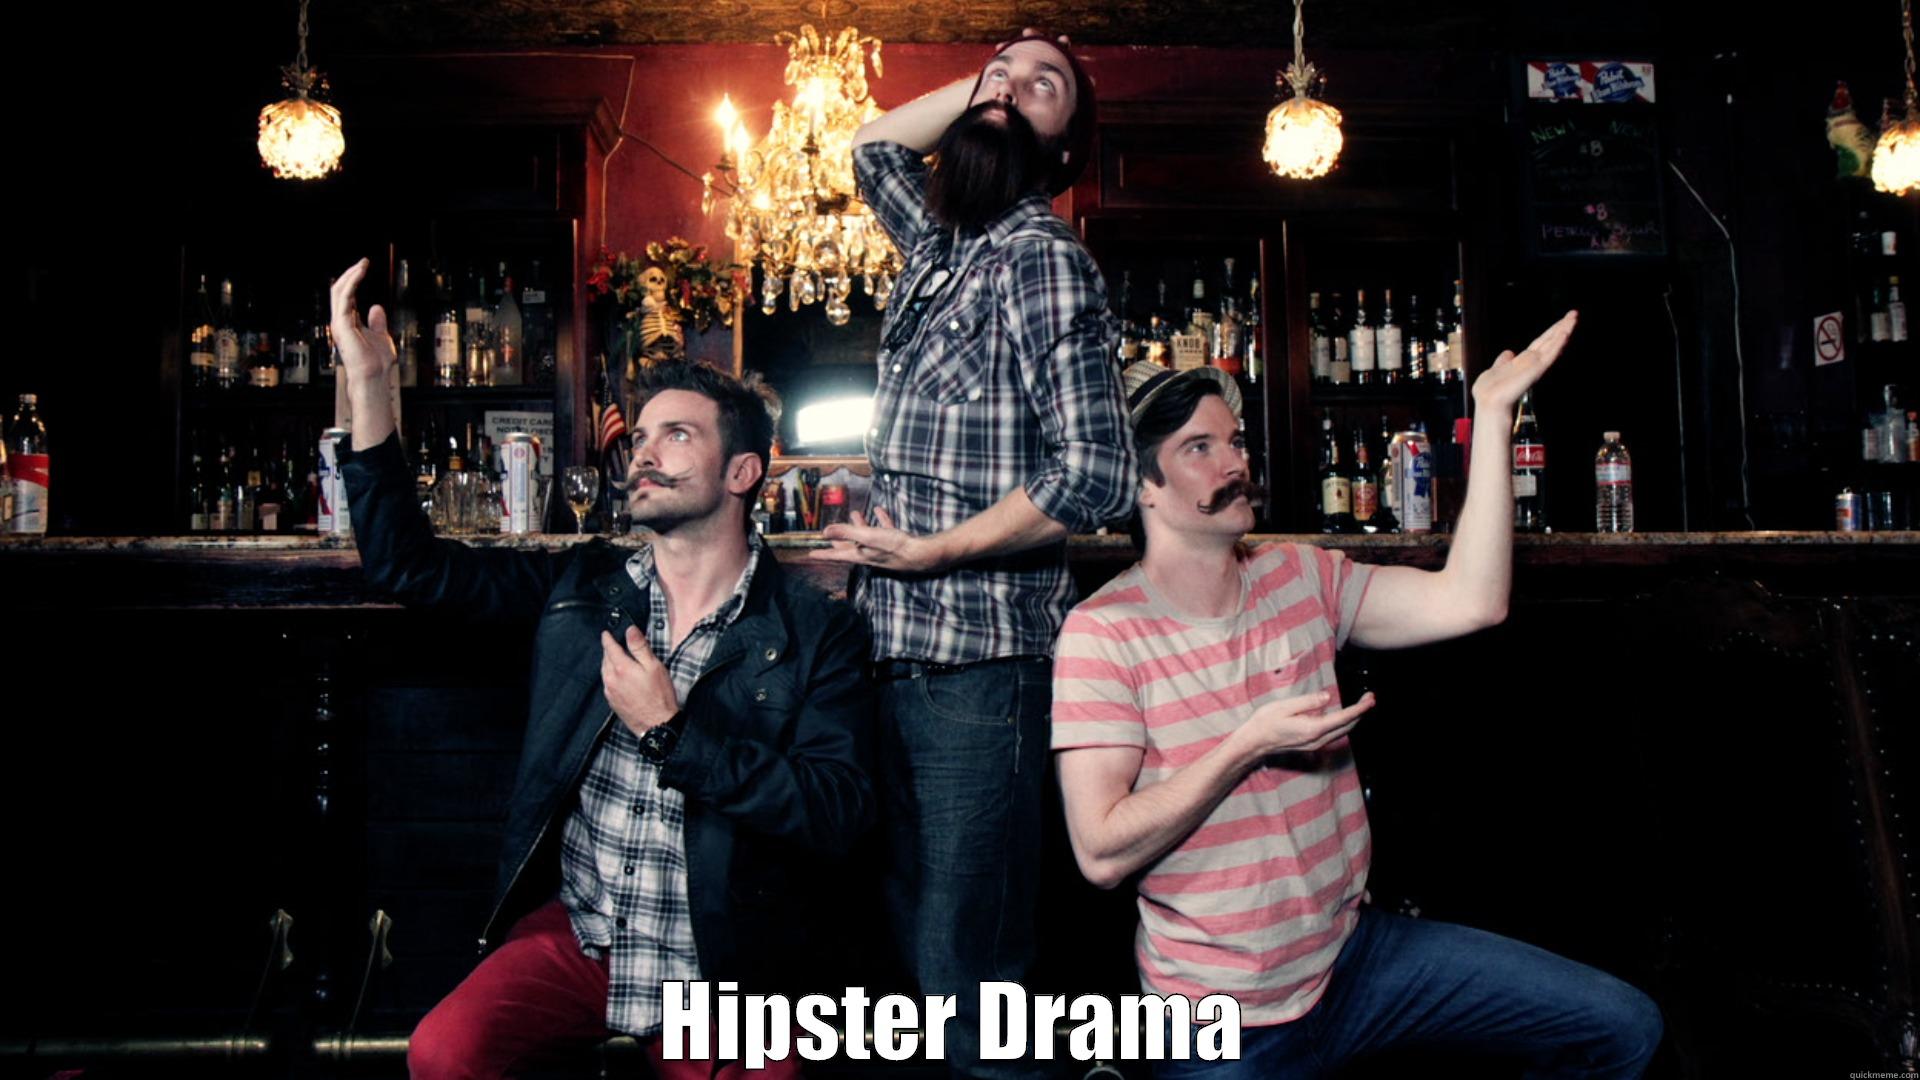 Hipster Drama -  HIPSTER DRAMA Misc